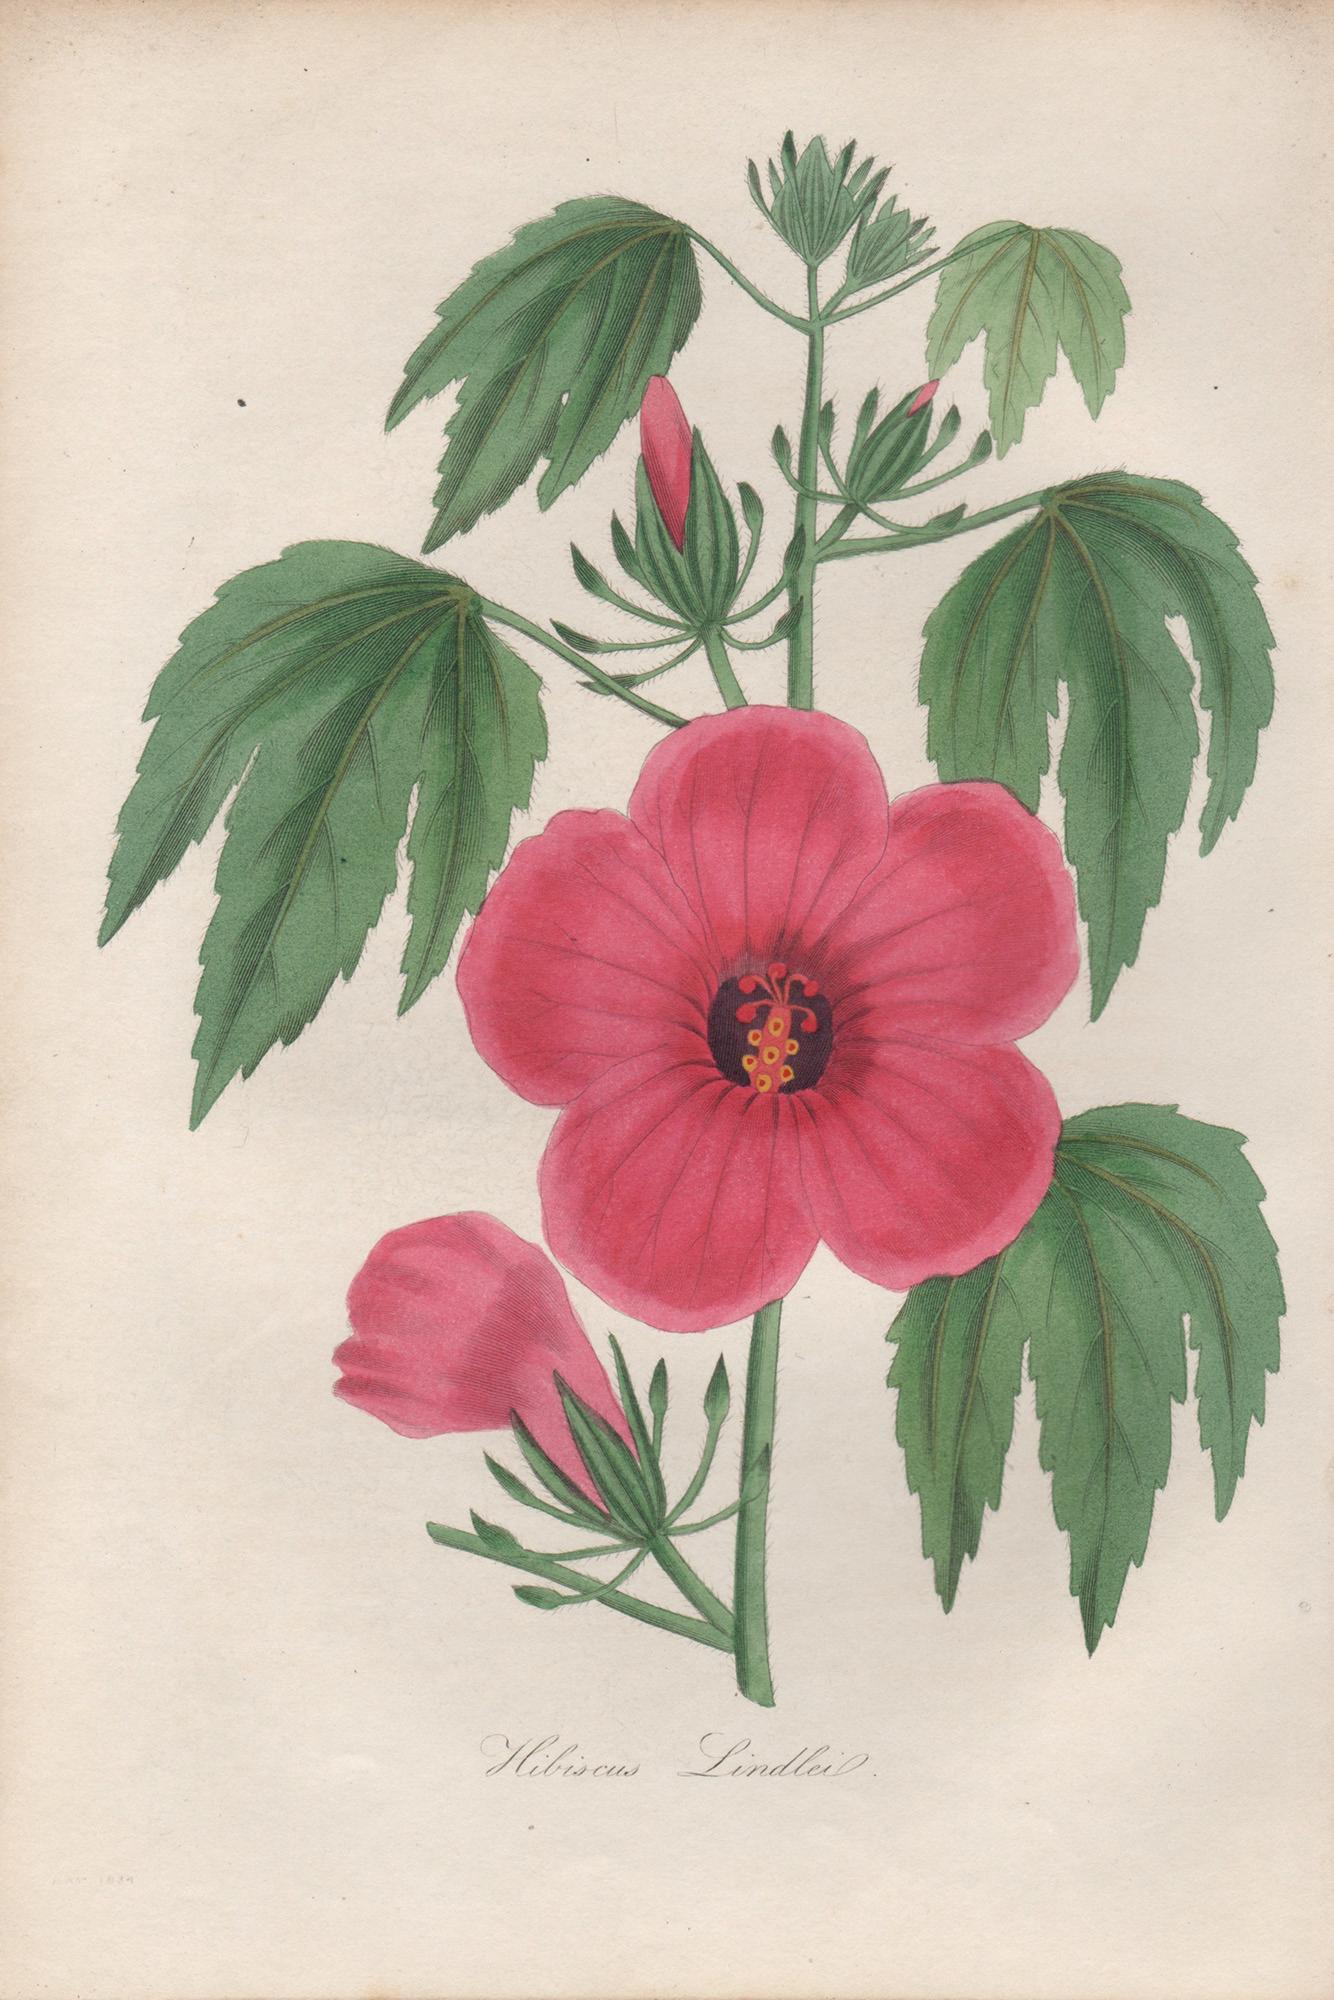 Frederick William Smith Print - Hibiscus Lindlei, antique botanical pink flower engraving